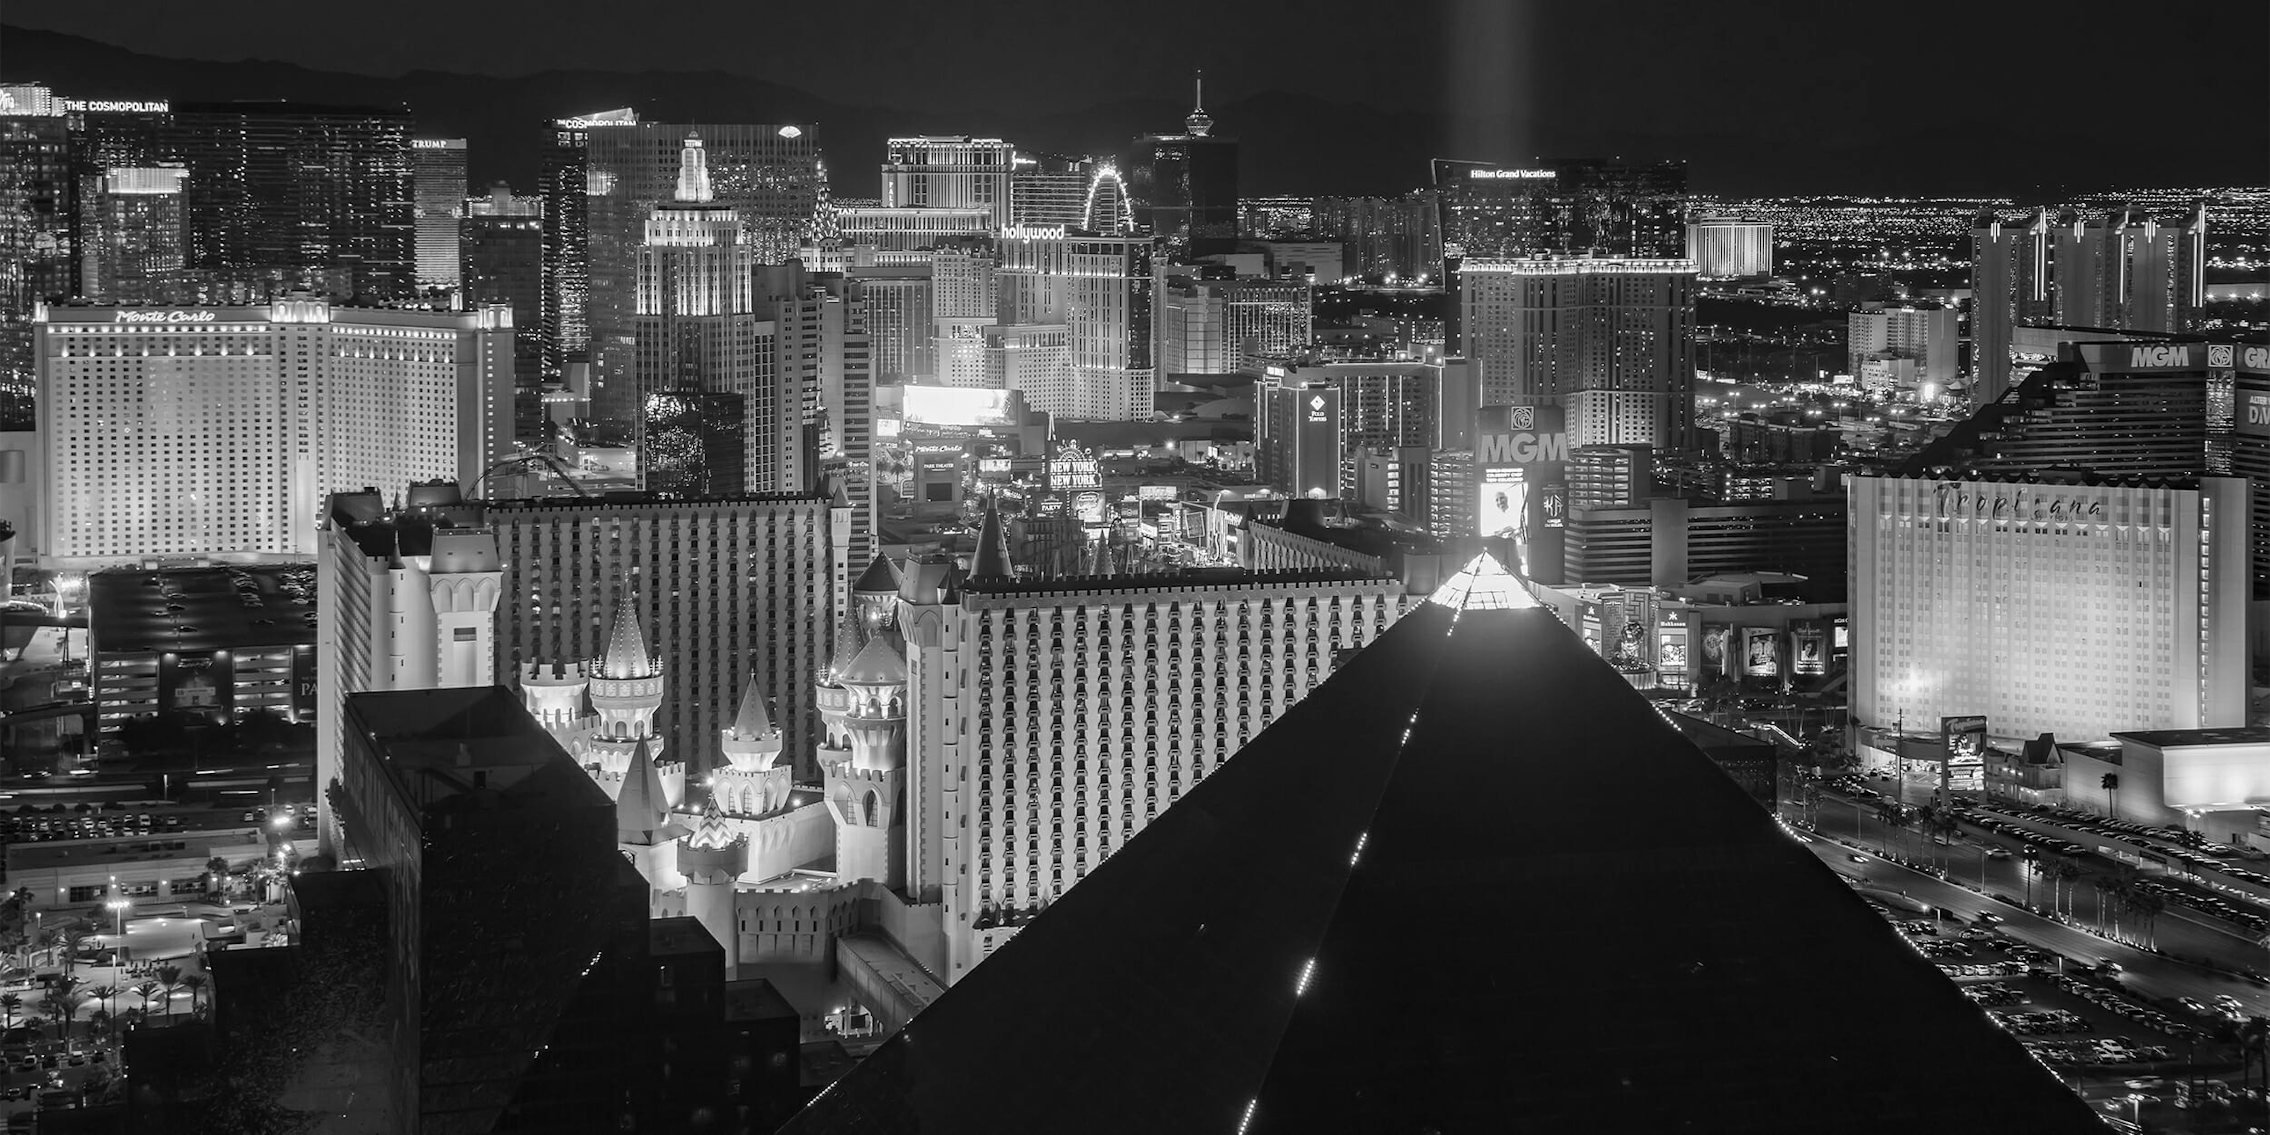 Las Vegas hotels and casinos at night